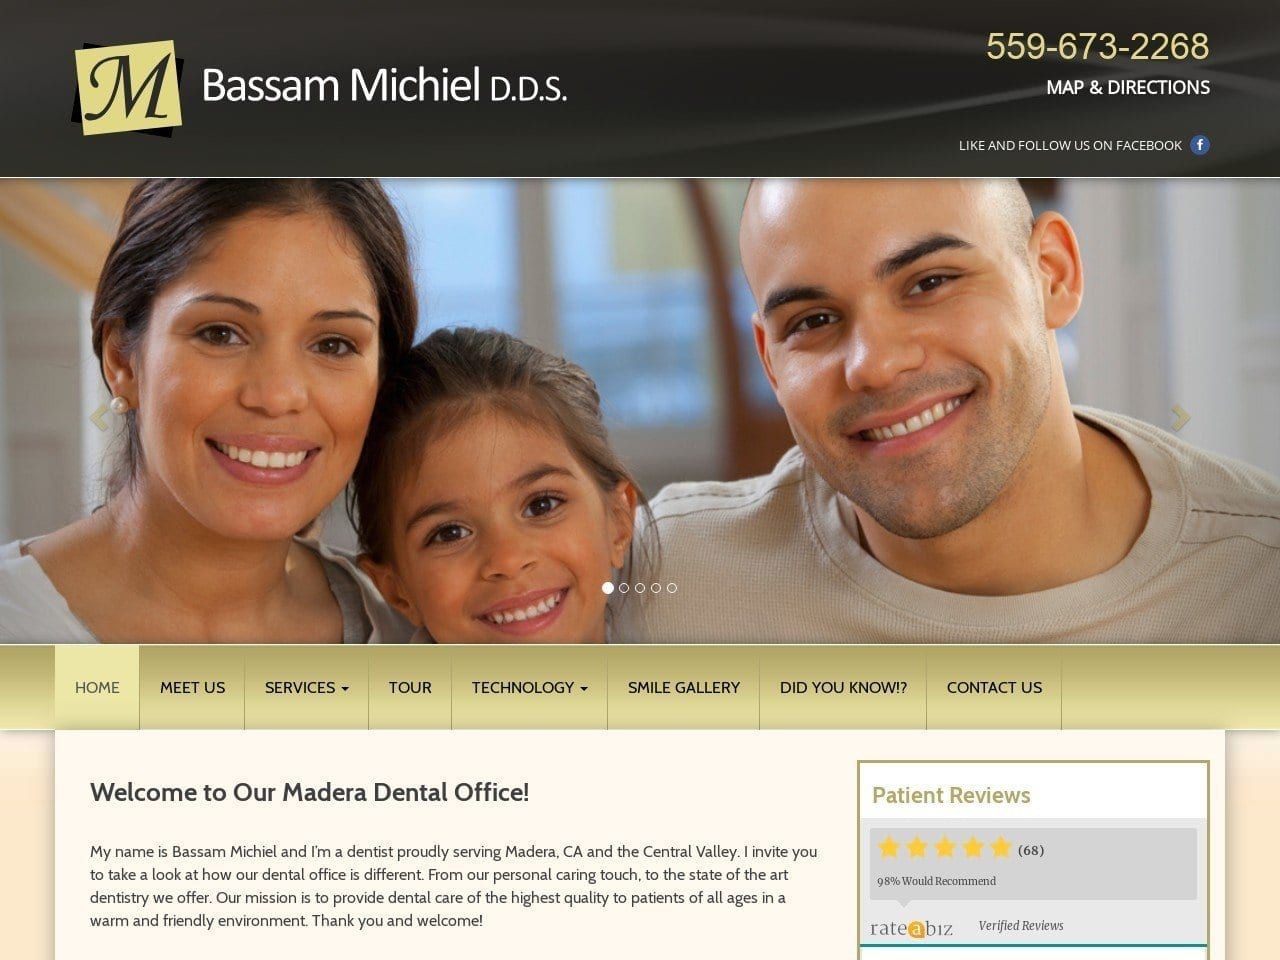 Bassam E. Michiel D.D.S. Inc. Website Screenshot from maderadds.com